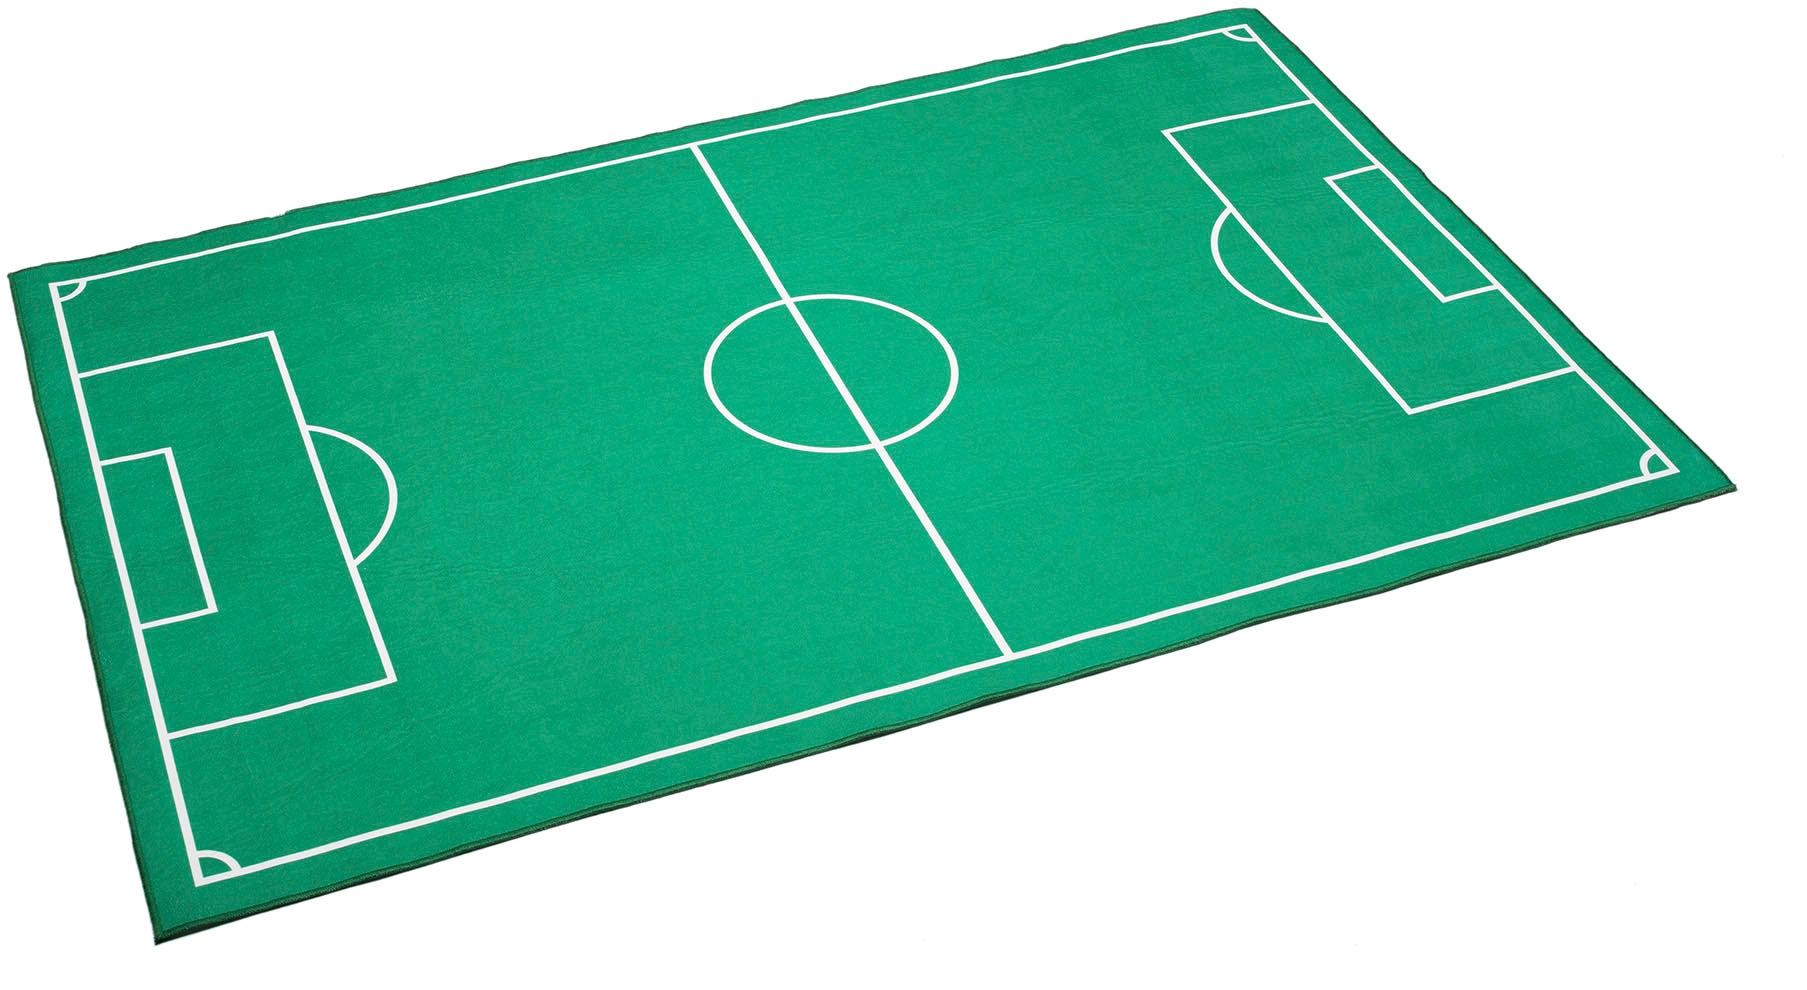 Böing Carpet Kinderteppich »Fußballfeld«, rechteckig, Spiel-Teppich, bedruckt, waschbar, Kinderzimmer